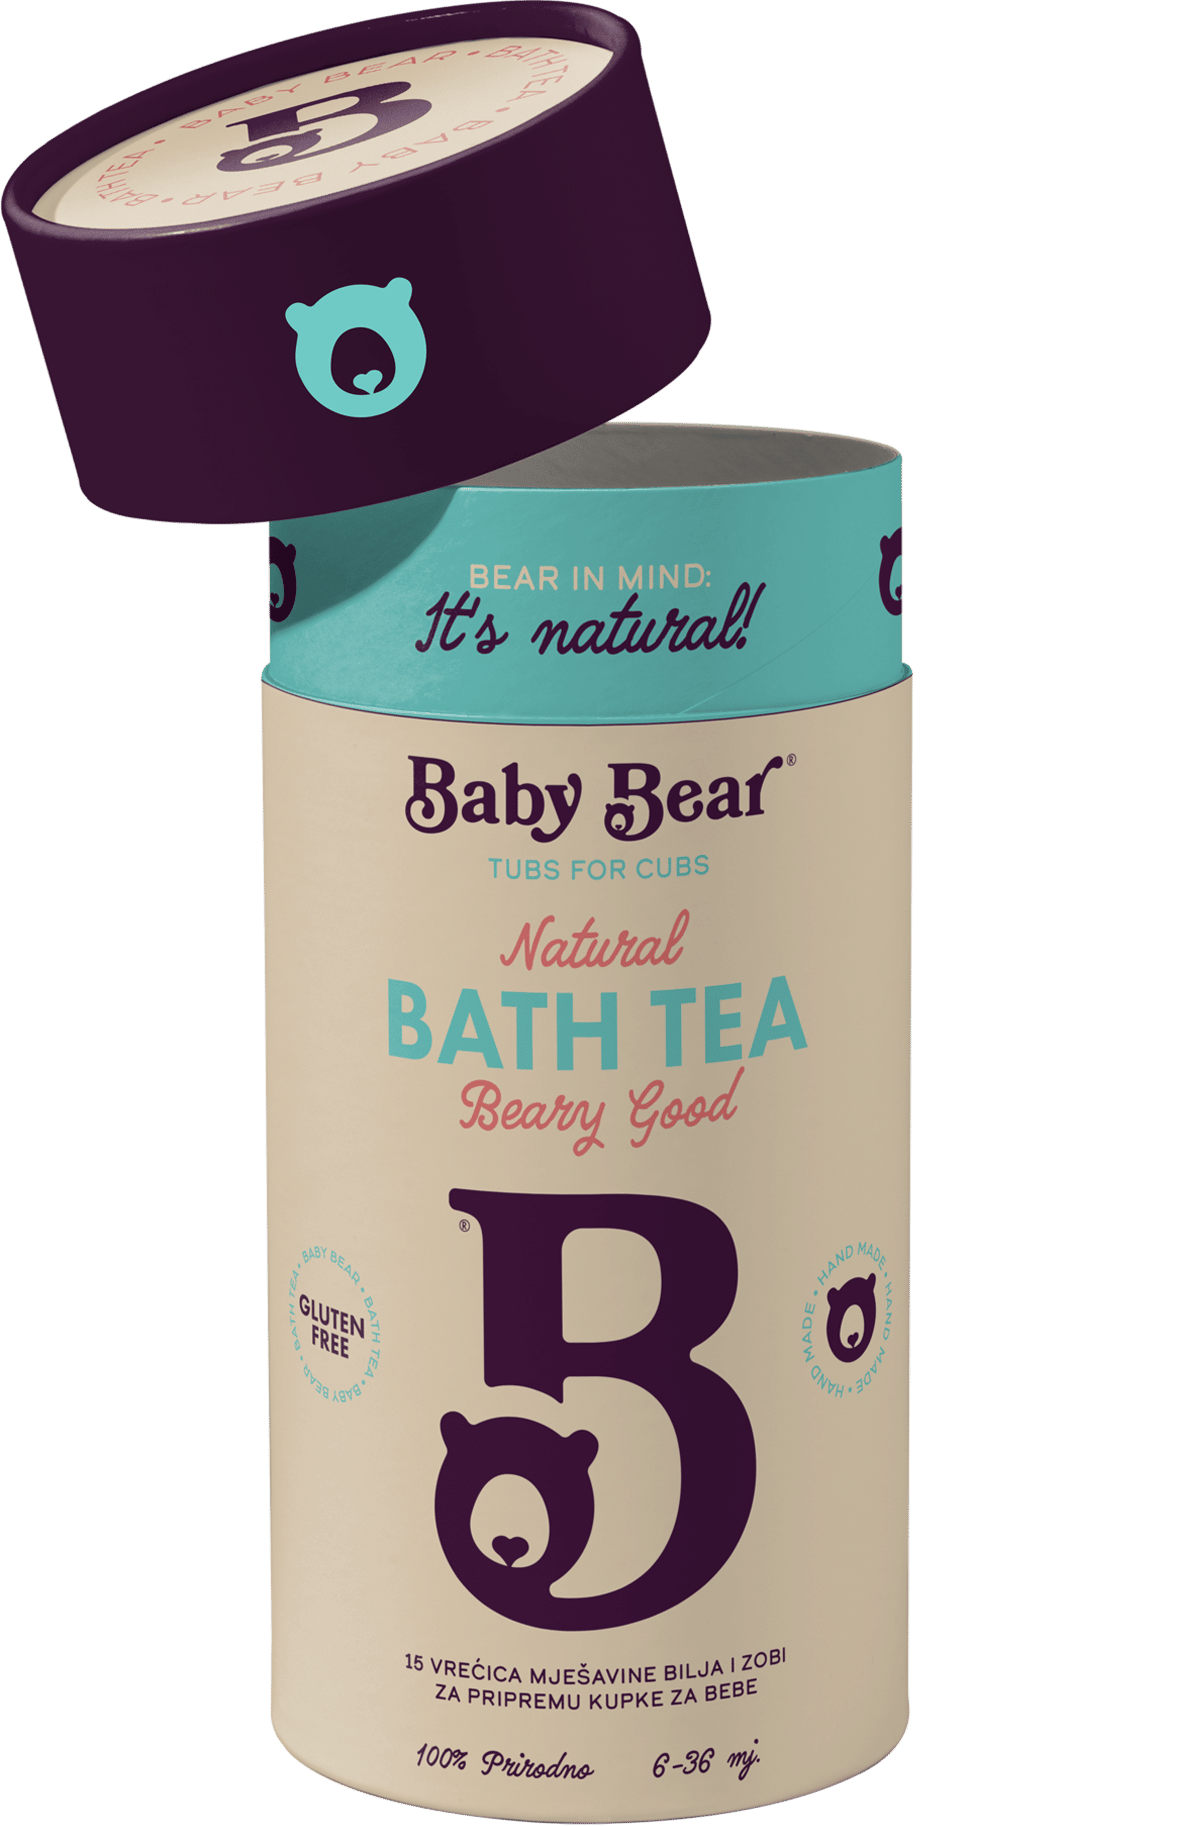 Baby Bear Product